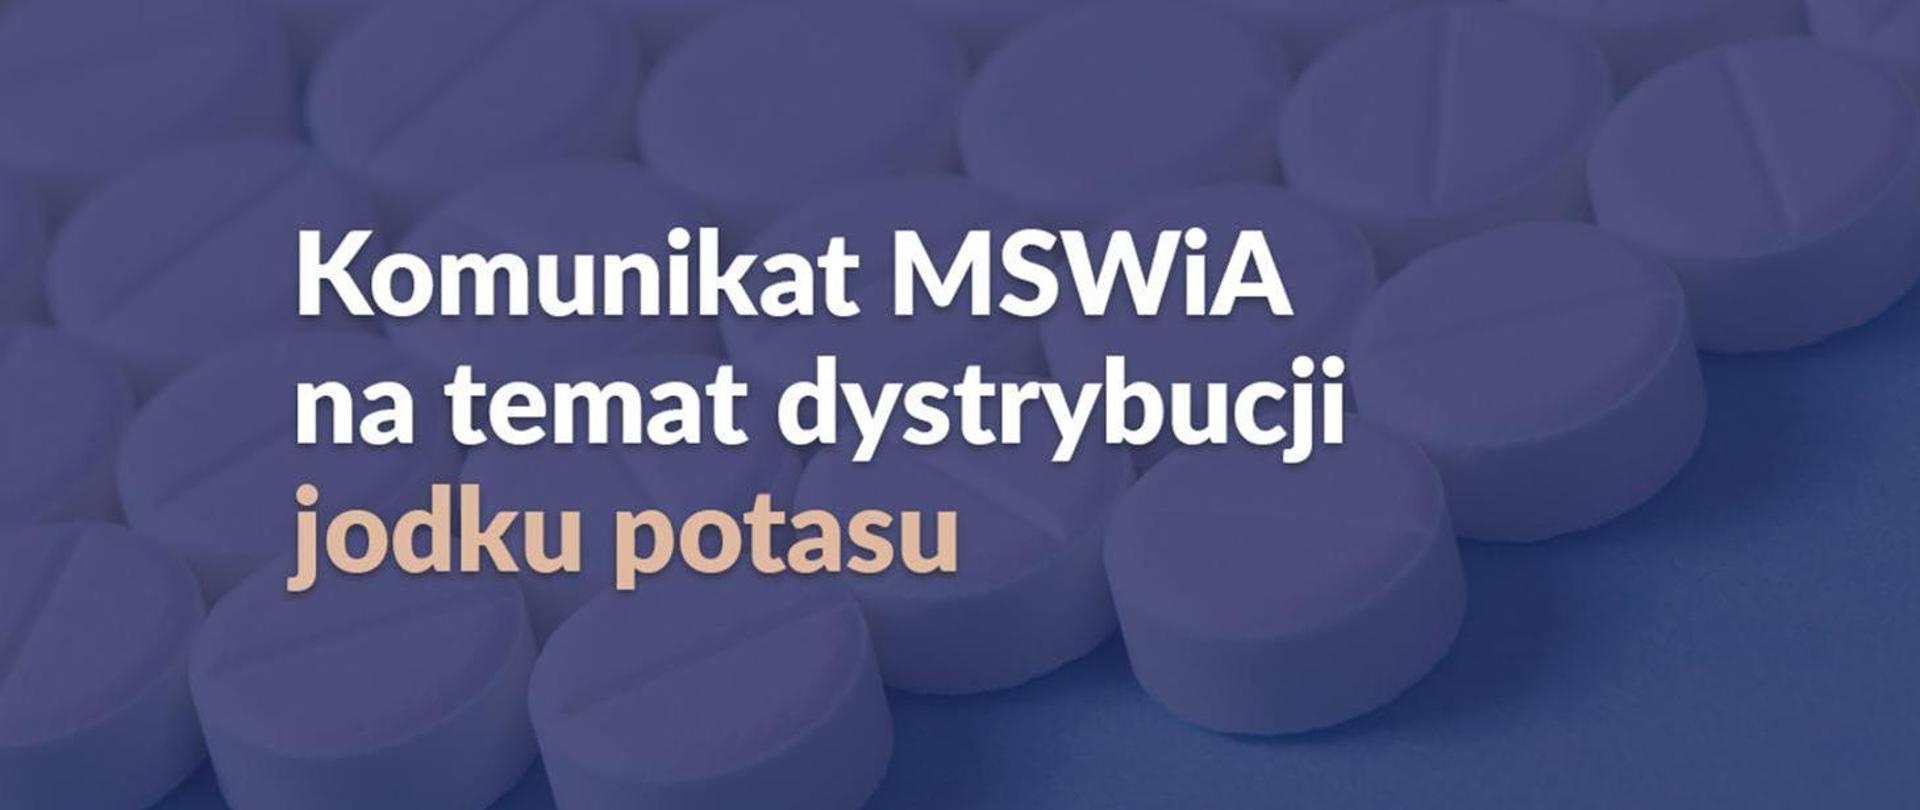 Komunikat_MSWiA na temat dystrybucji jodku potasu